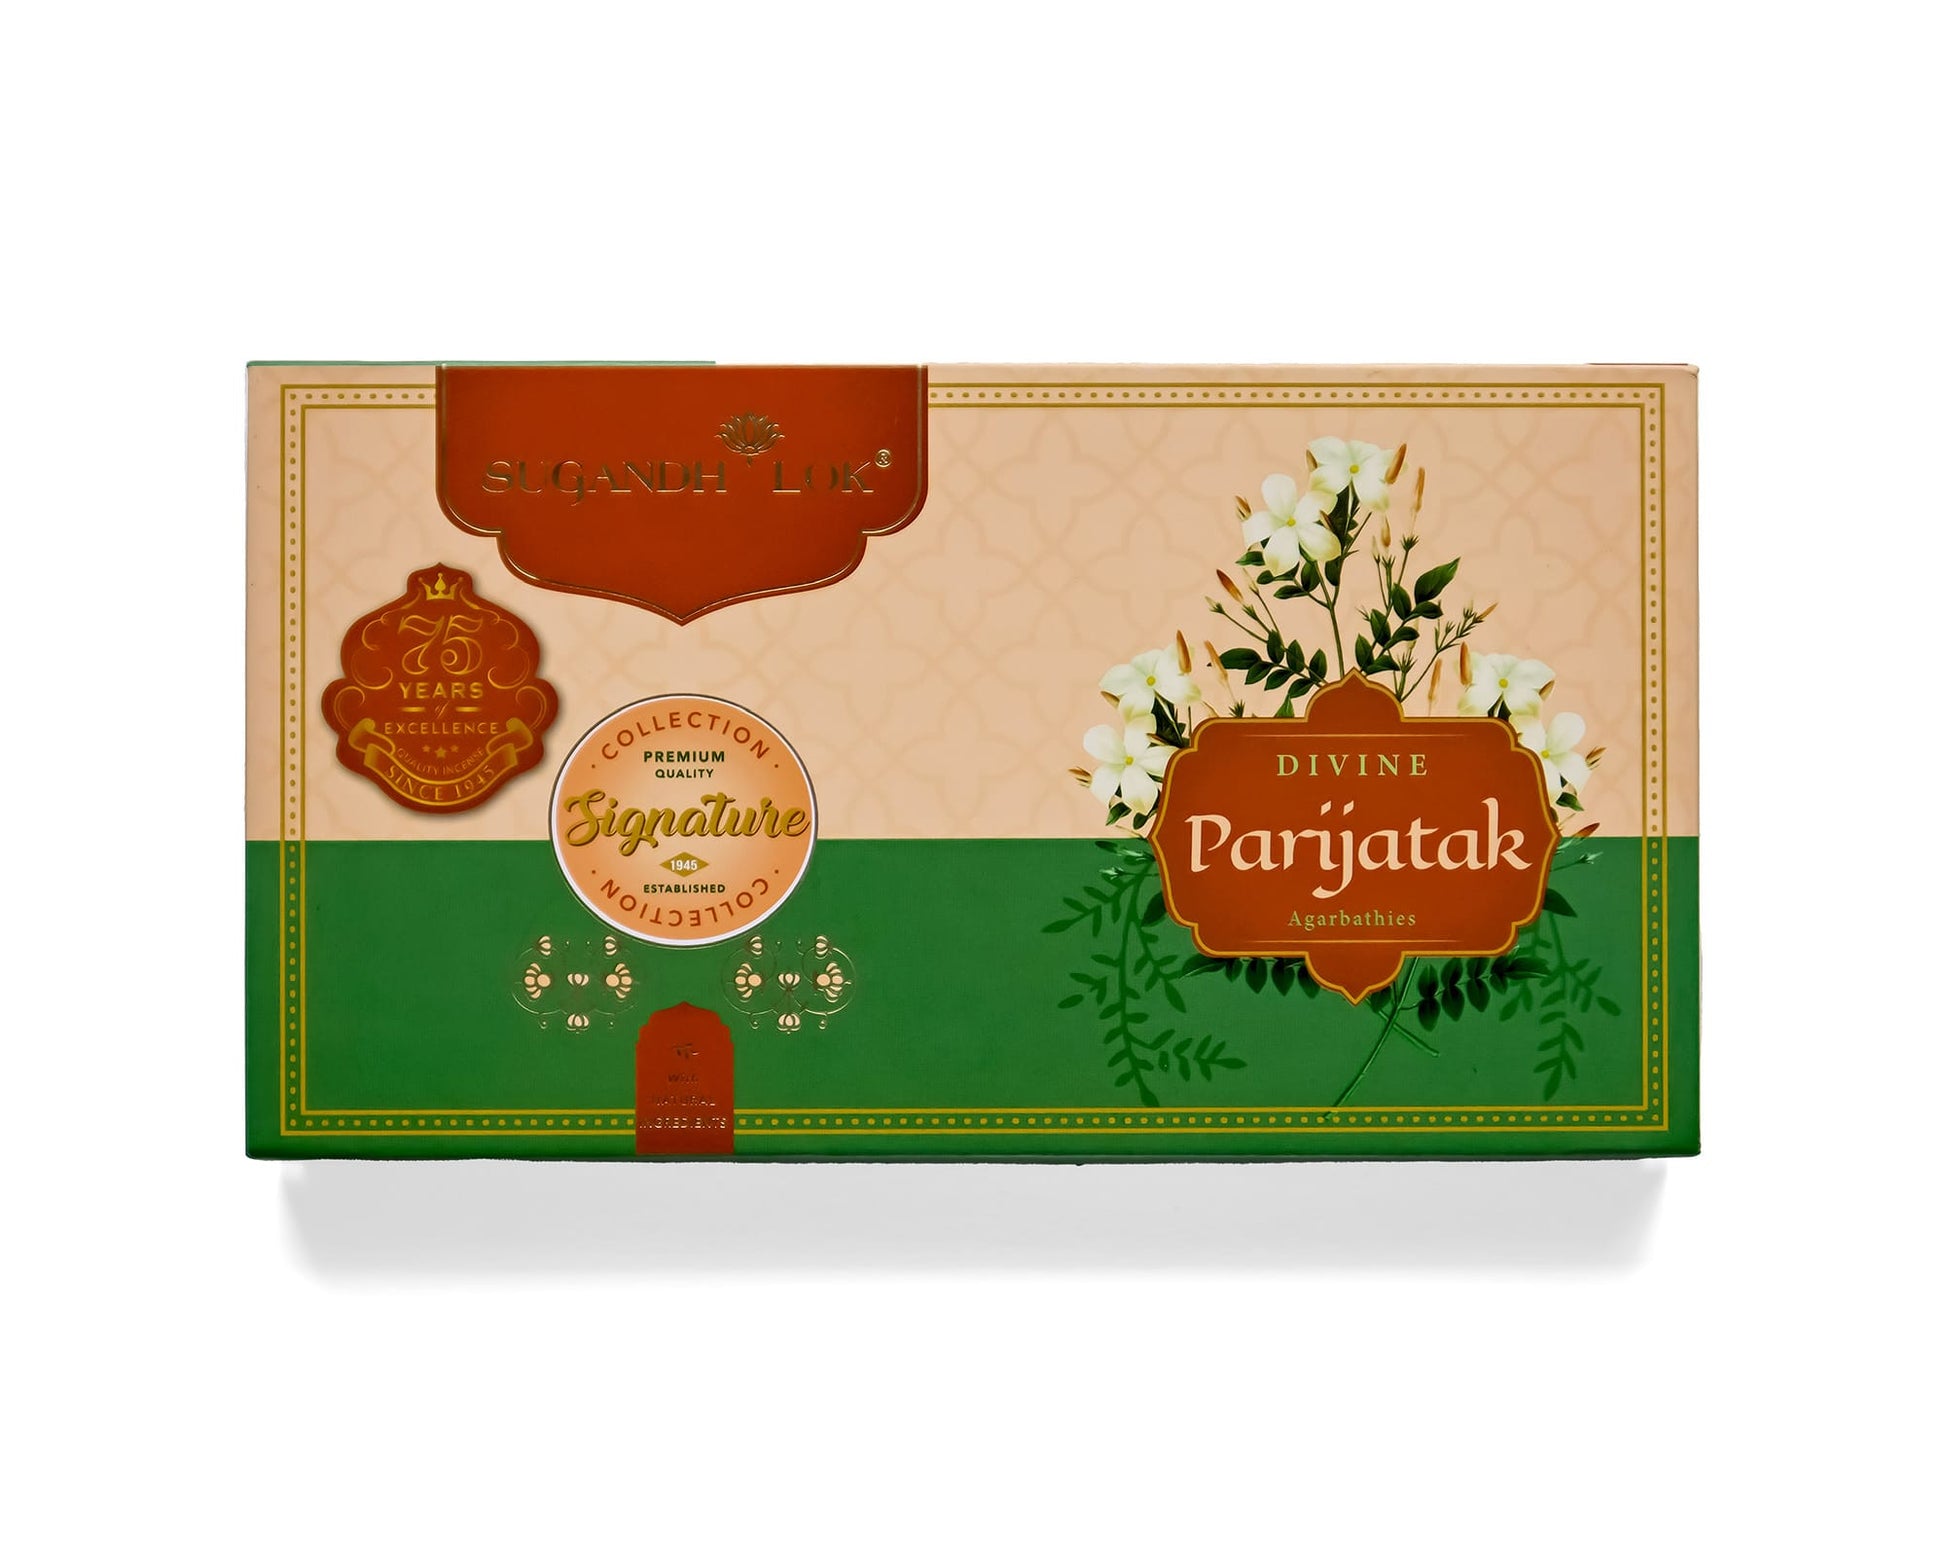 Divine Parijatak Agarbatti Box by SugandhLok